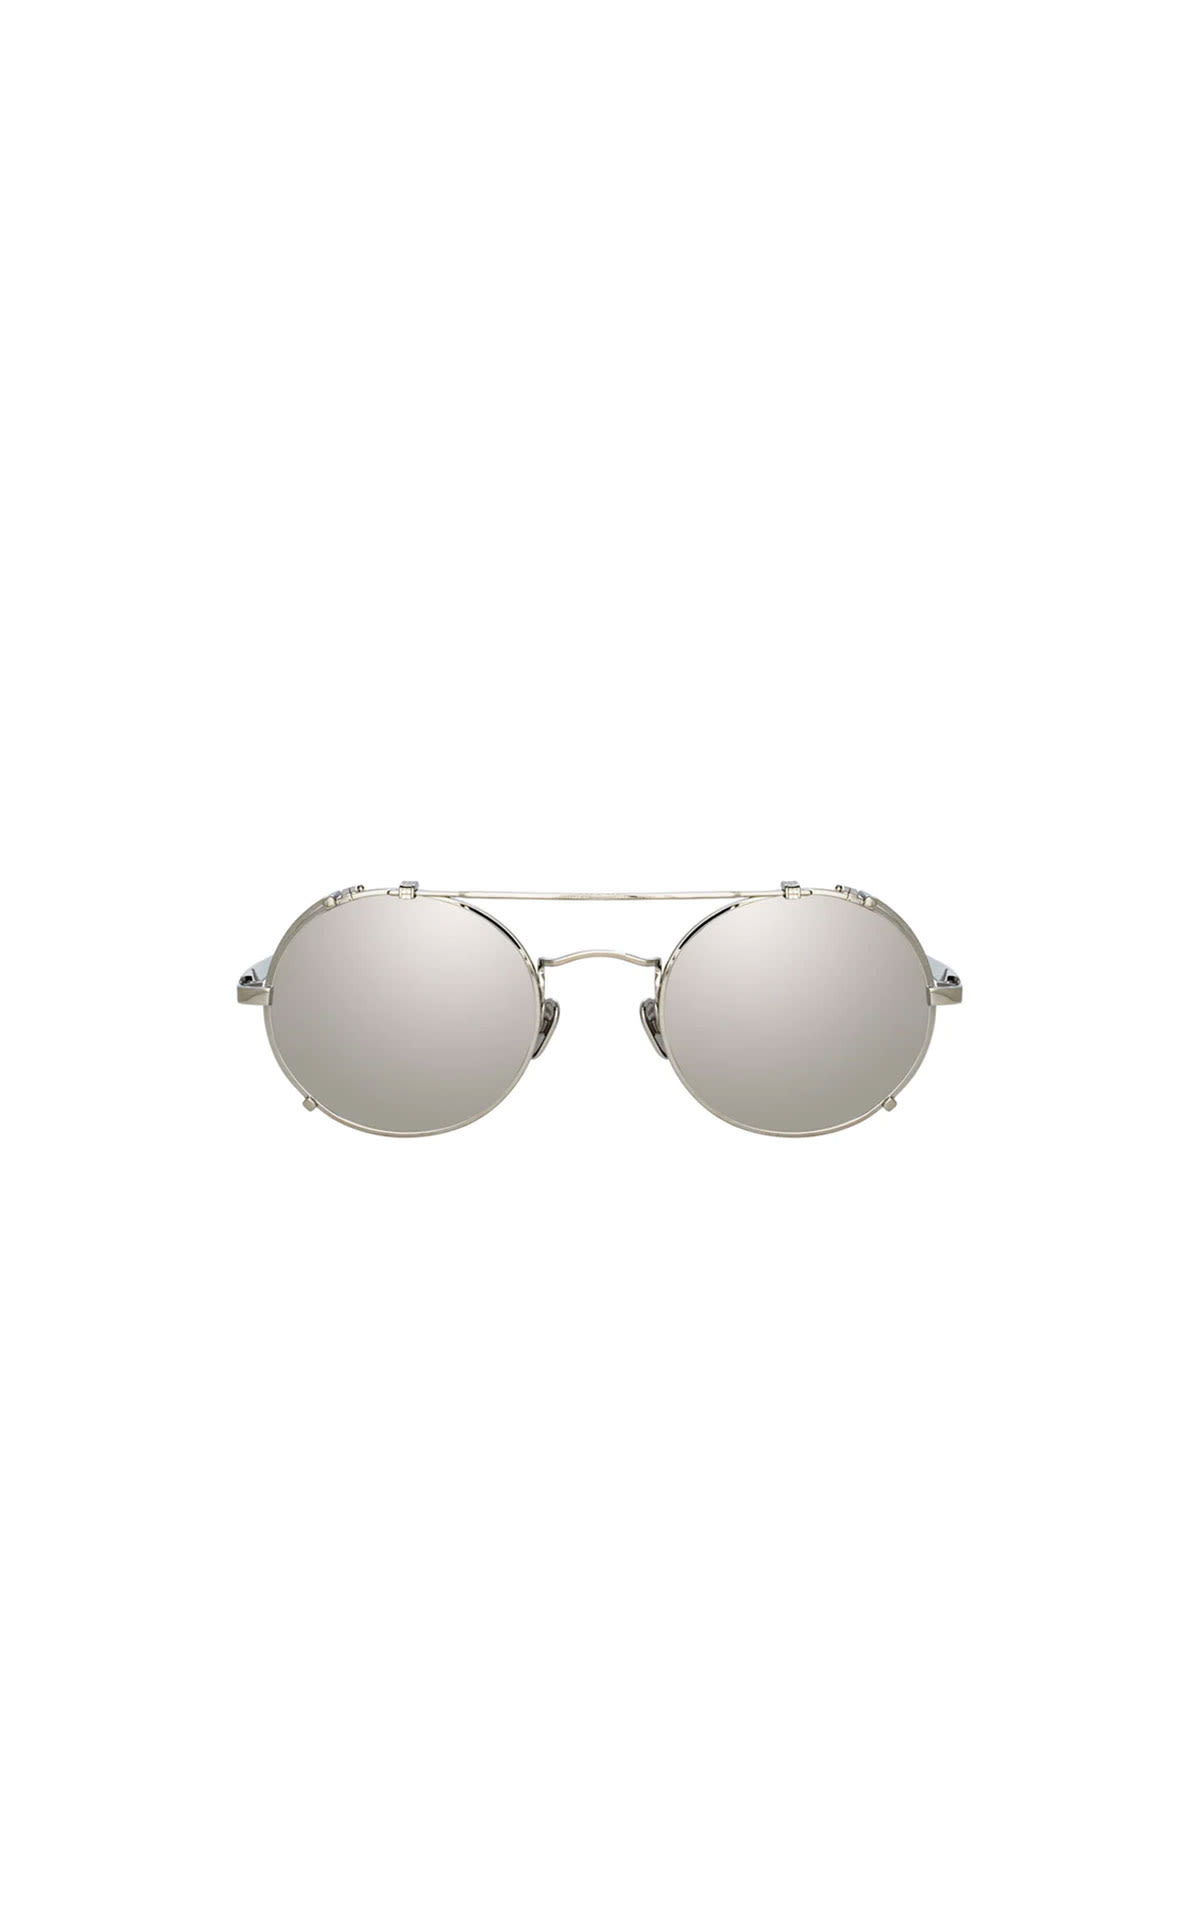 Linda Farrow Jimi precious lens sunglasses from Bicester Village